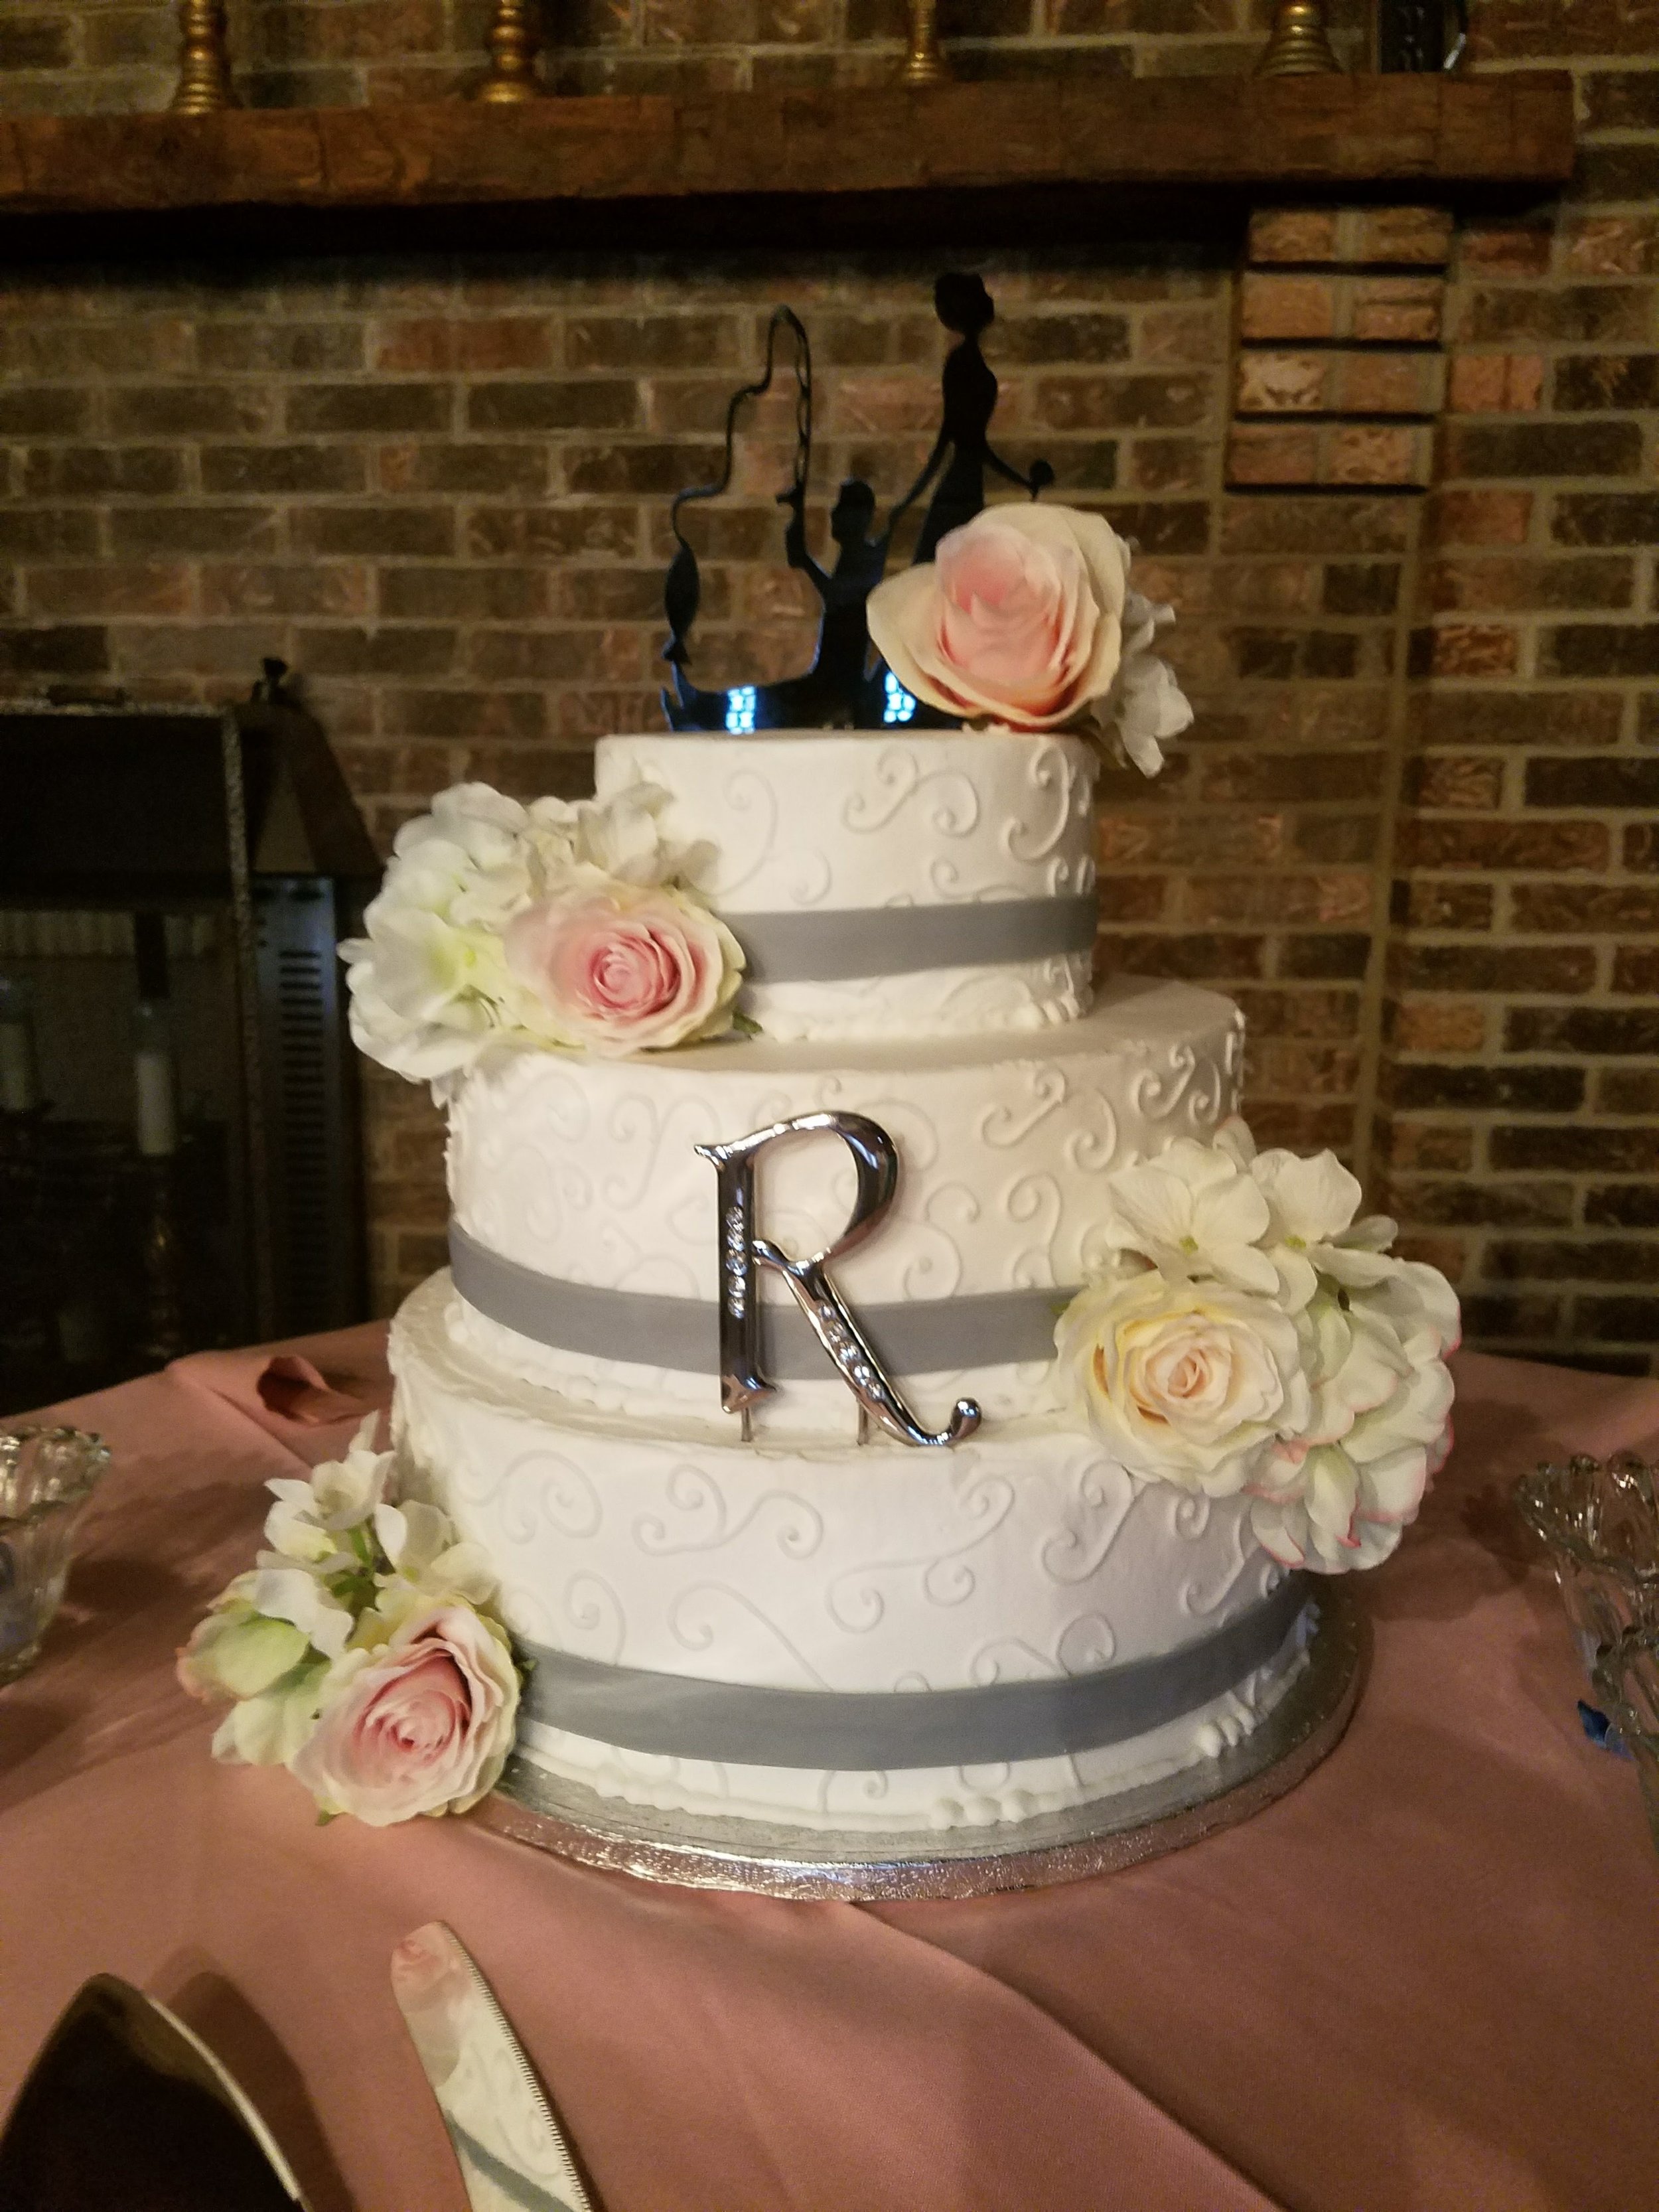 WEDDING CAKES GALLERY